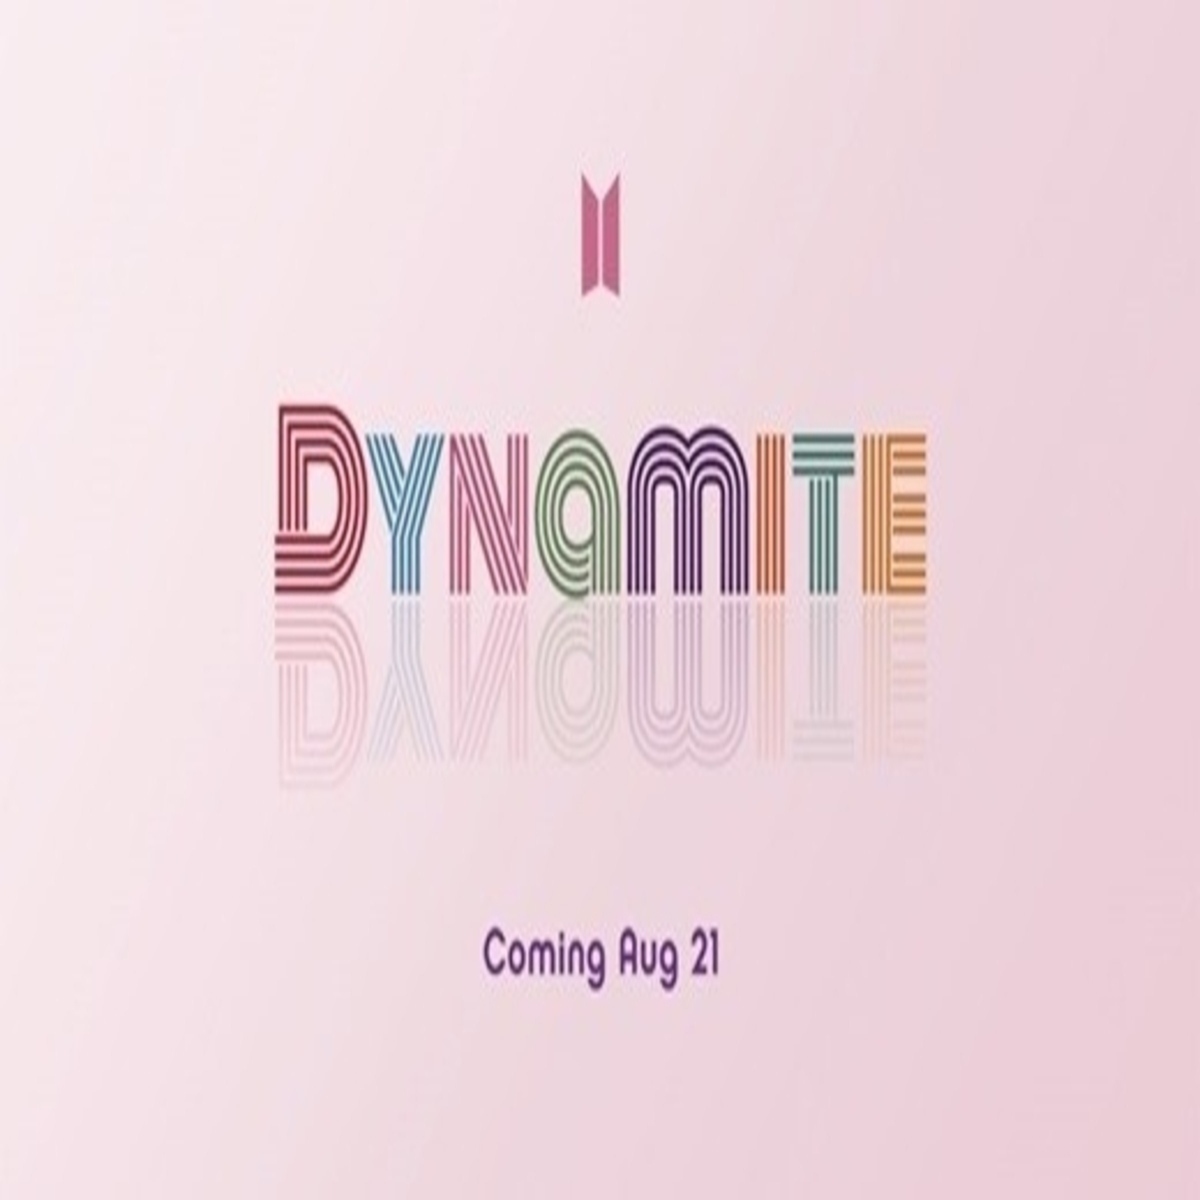 Bts 防弾少年団 新曲のタイトルは Dynamite に決定 ロゴ公開後に早くも世界中で話題に Kstyle